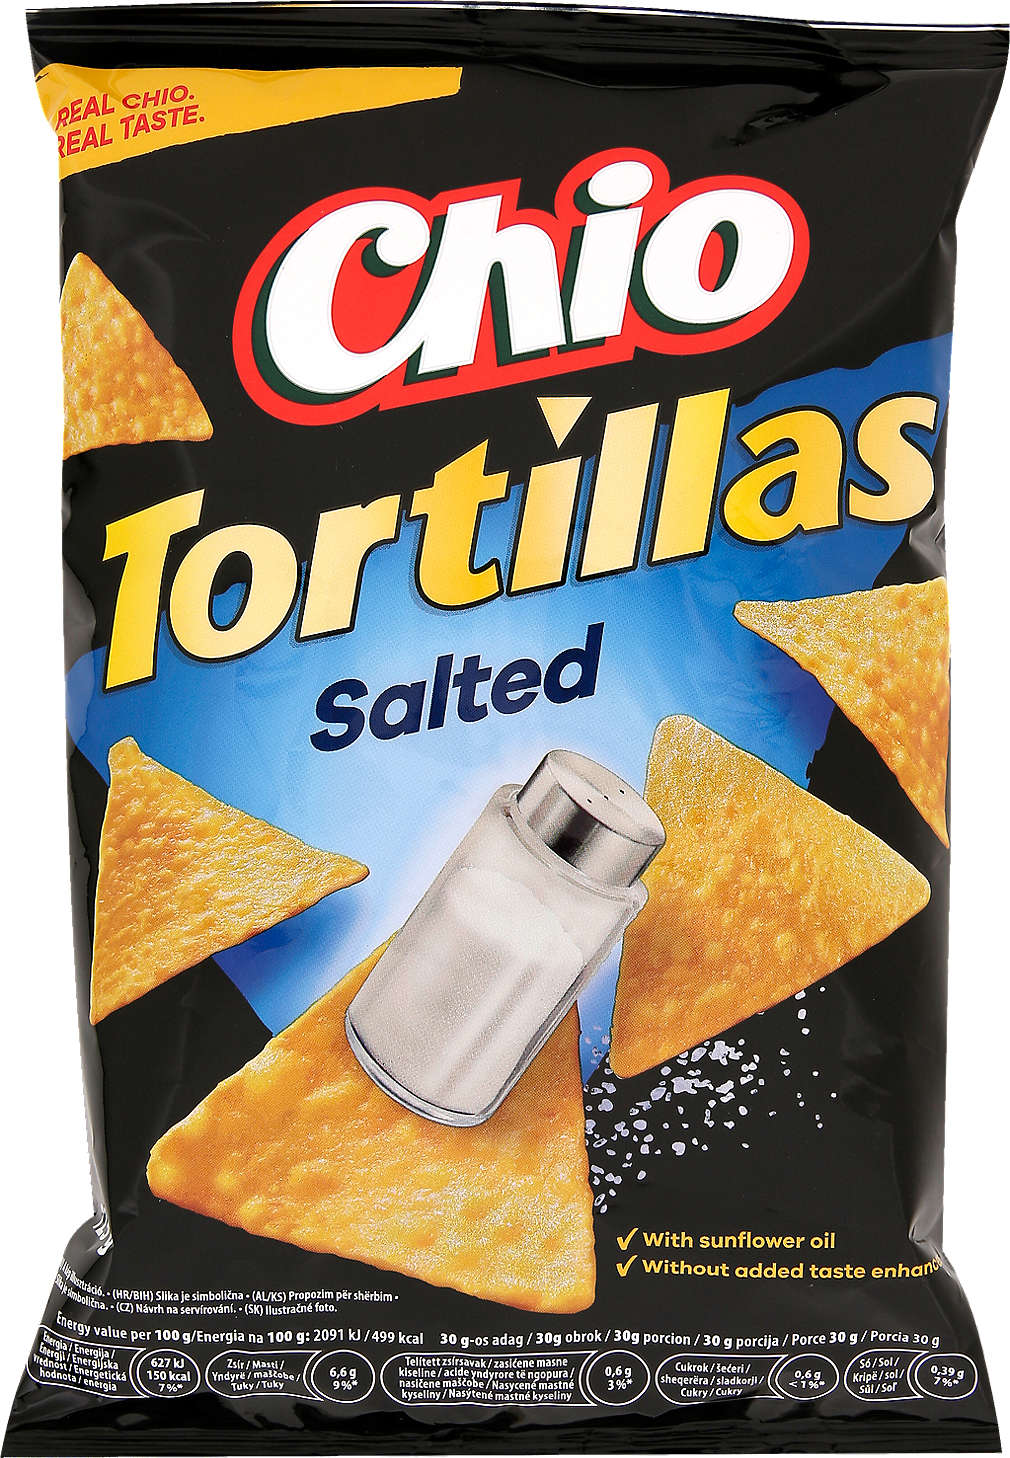 Zobrazit nabídku Chio Tortillas